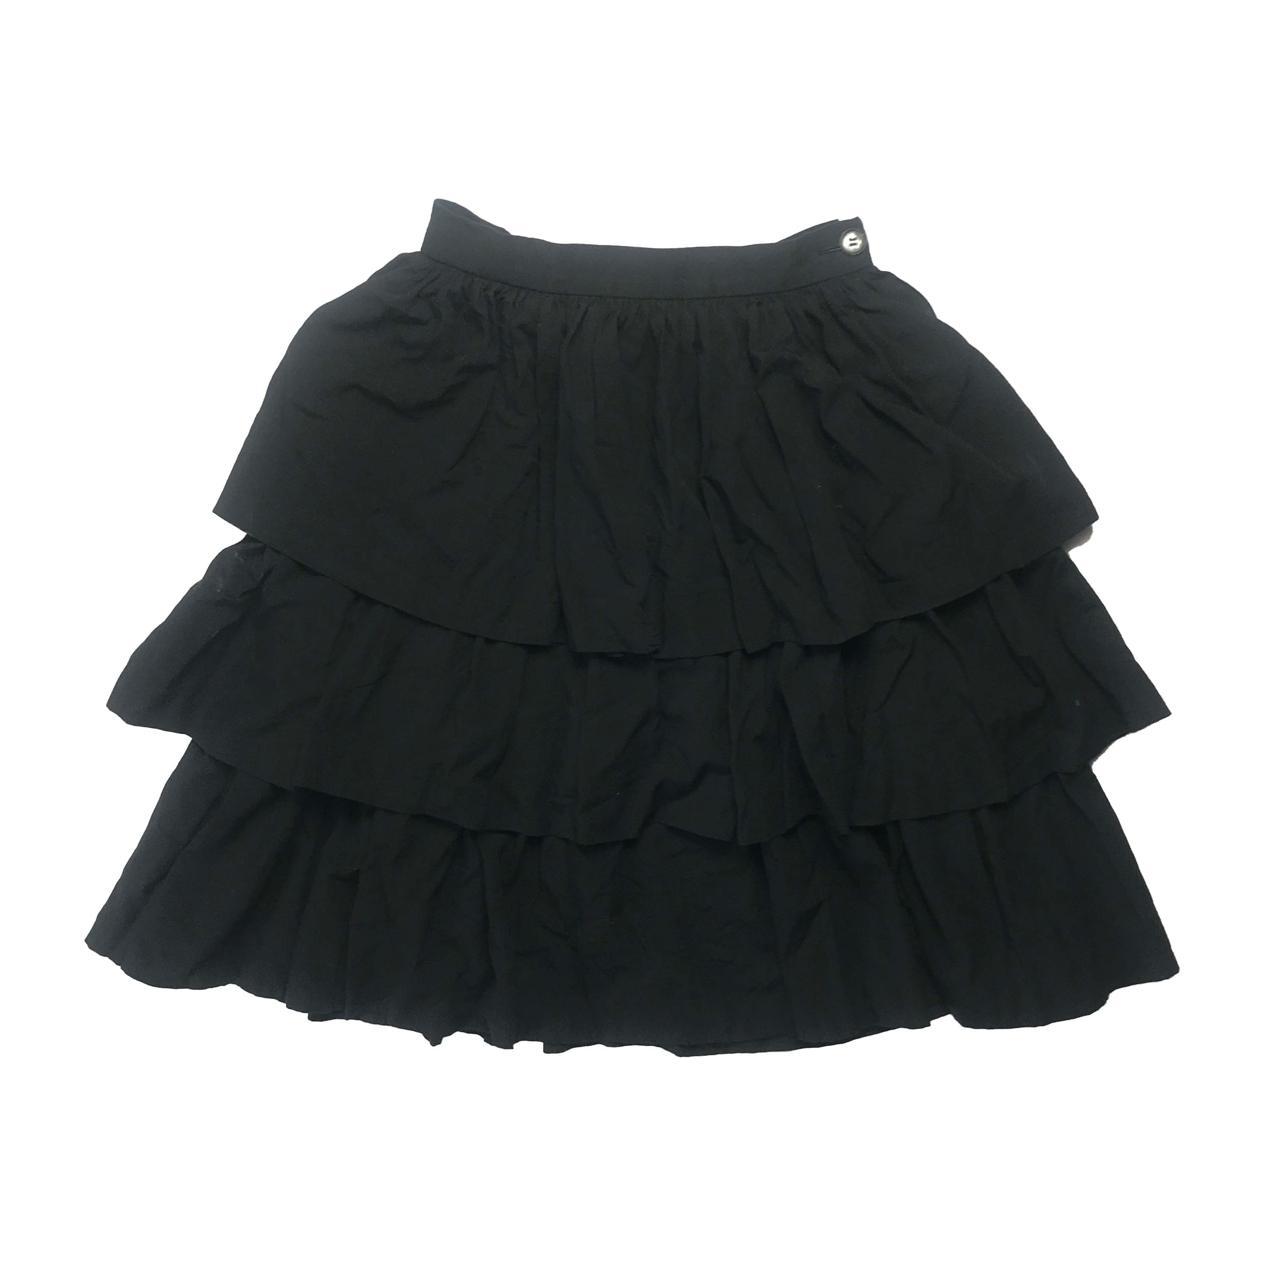 ♥︎ RARA EMO GOTH RUFFLE SKIRT ♥︎ The Casket skirt.... - Depop